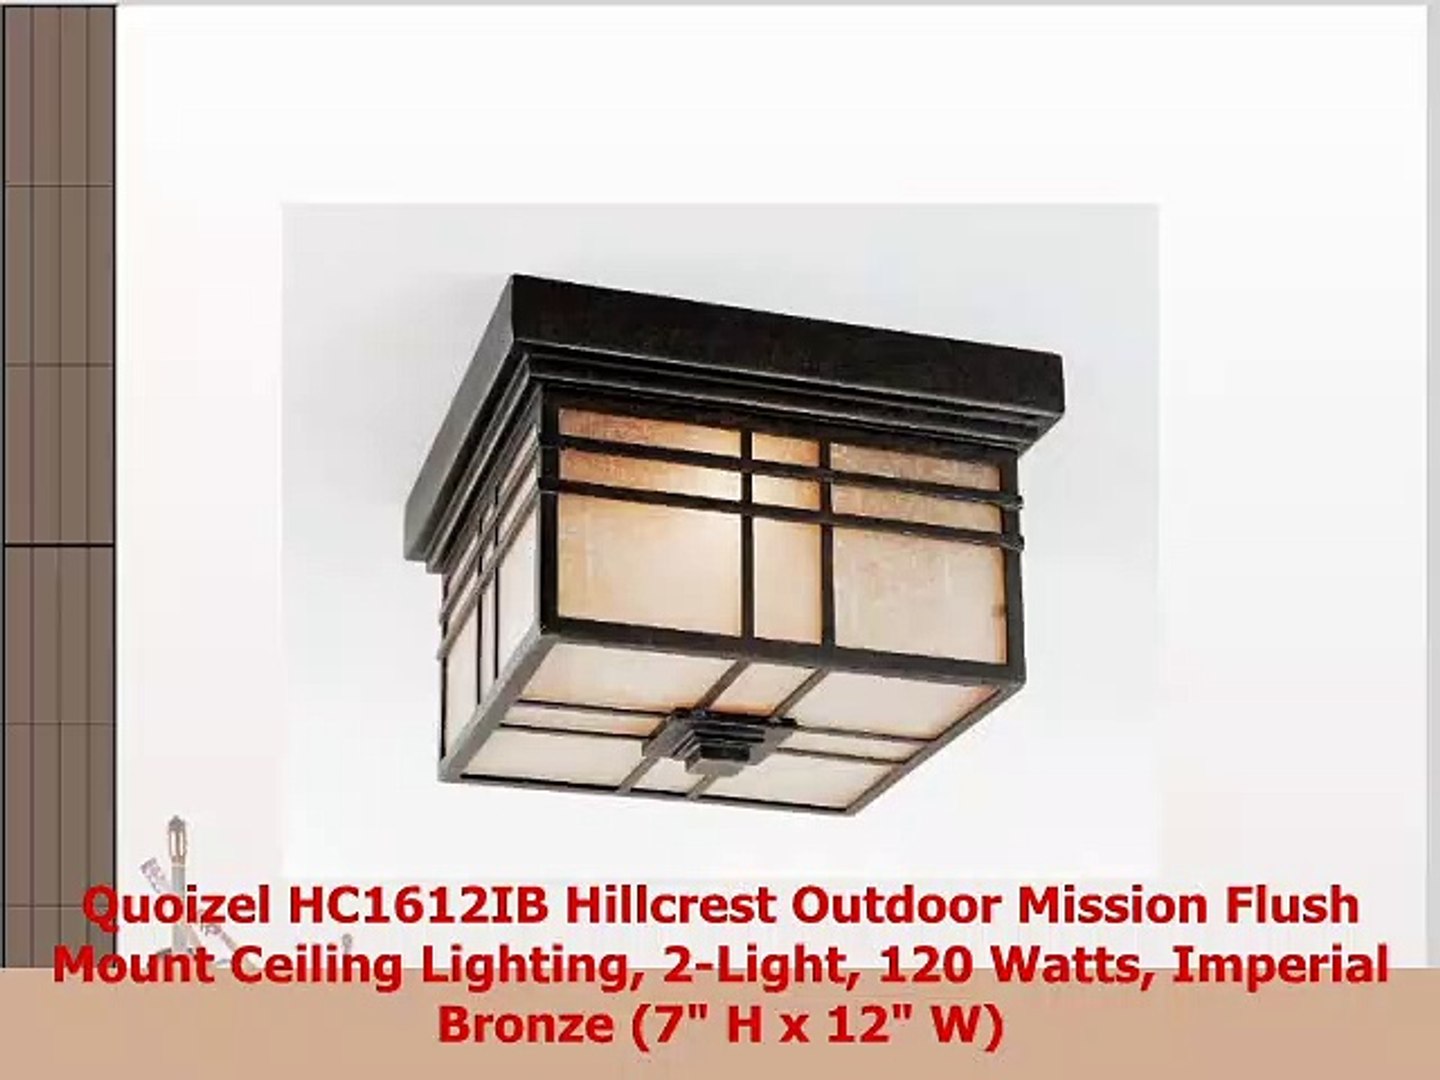 Quoizel Hc1612ib Hillcrest Outdoor Mission Flush Mount Ceiling